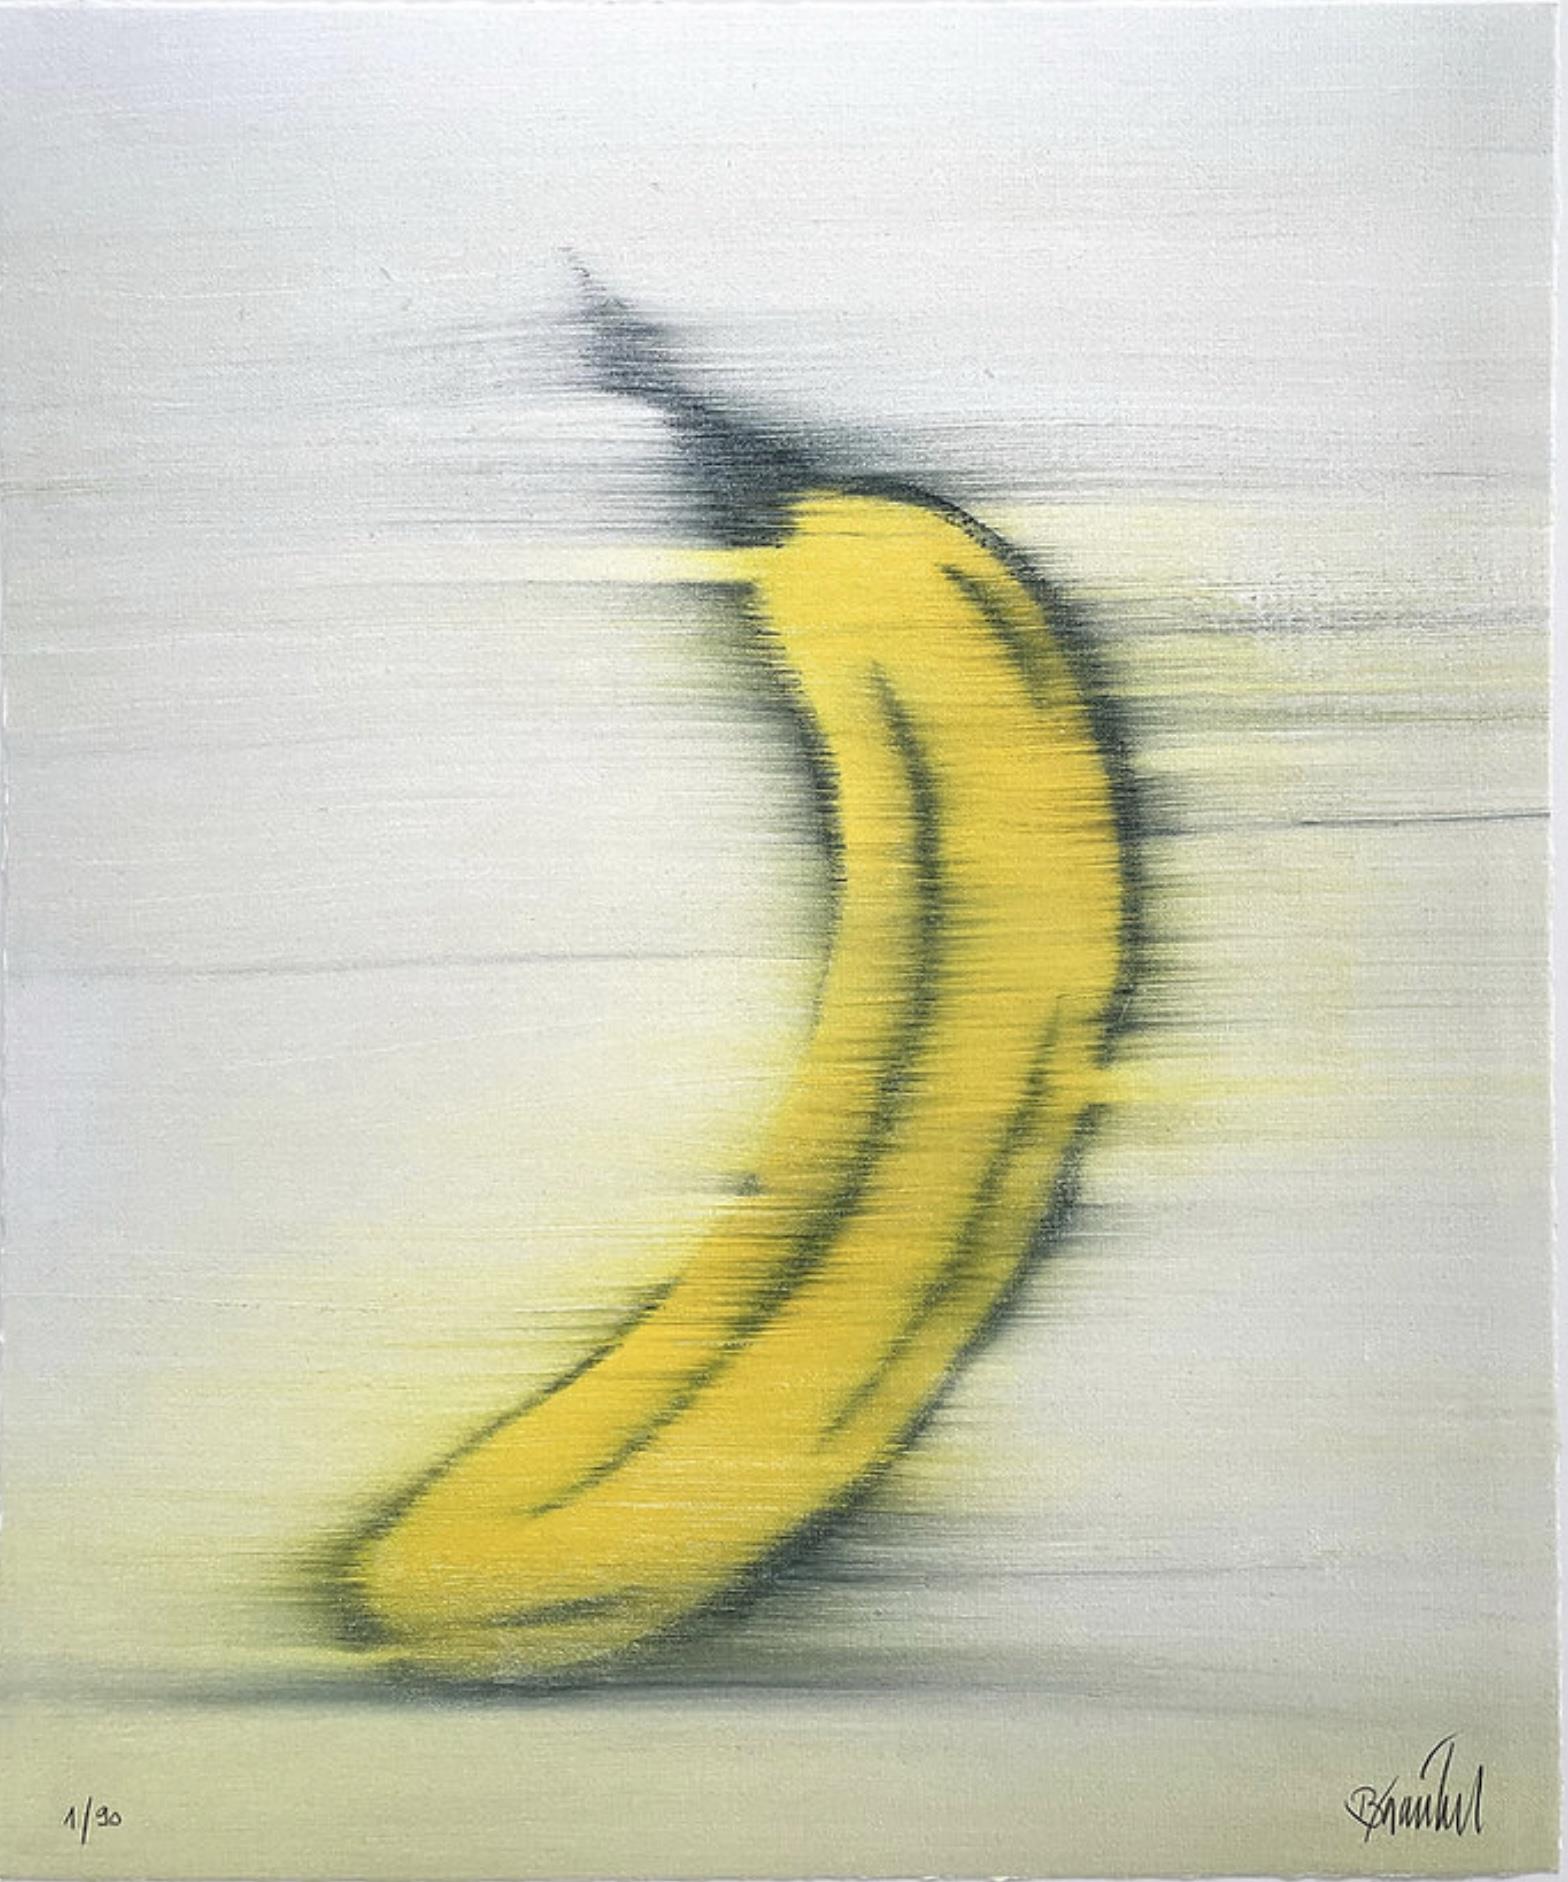 Richter-Banane - Baumgärtel, Thomas - k-2203BT5